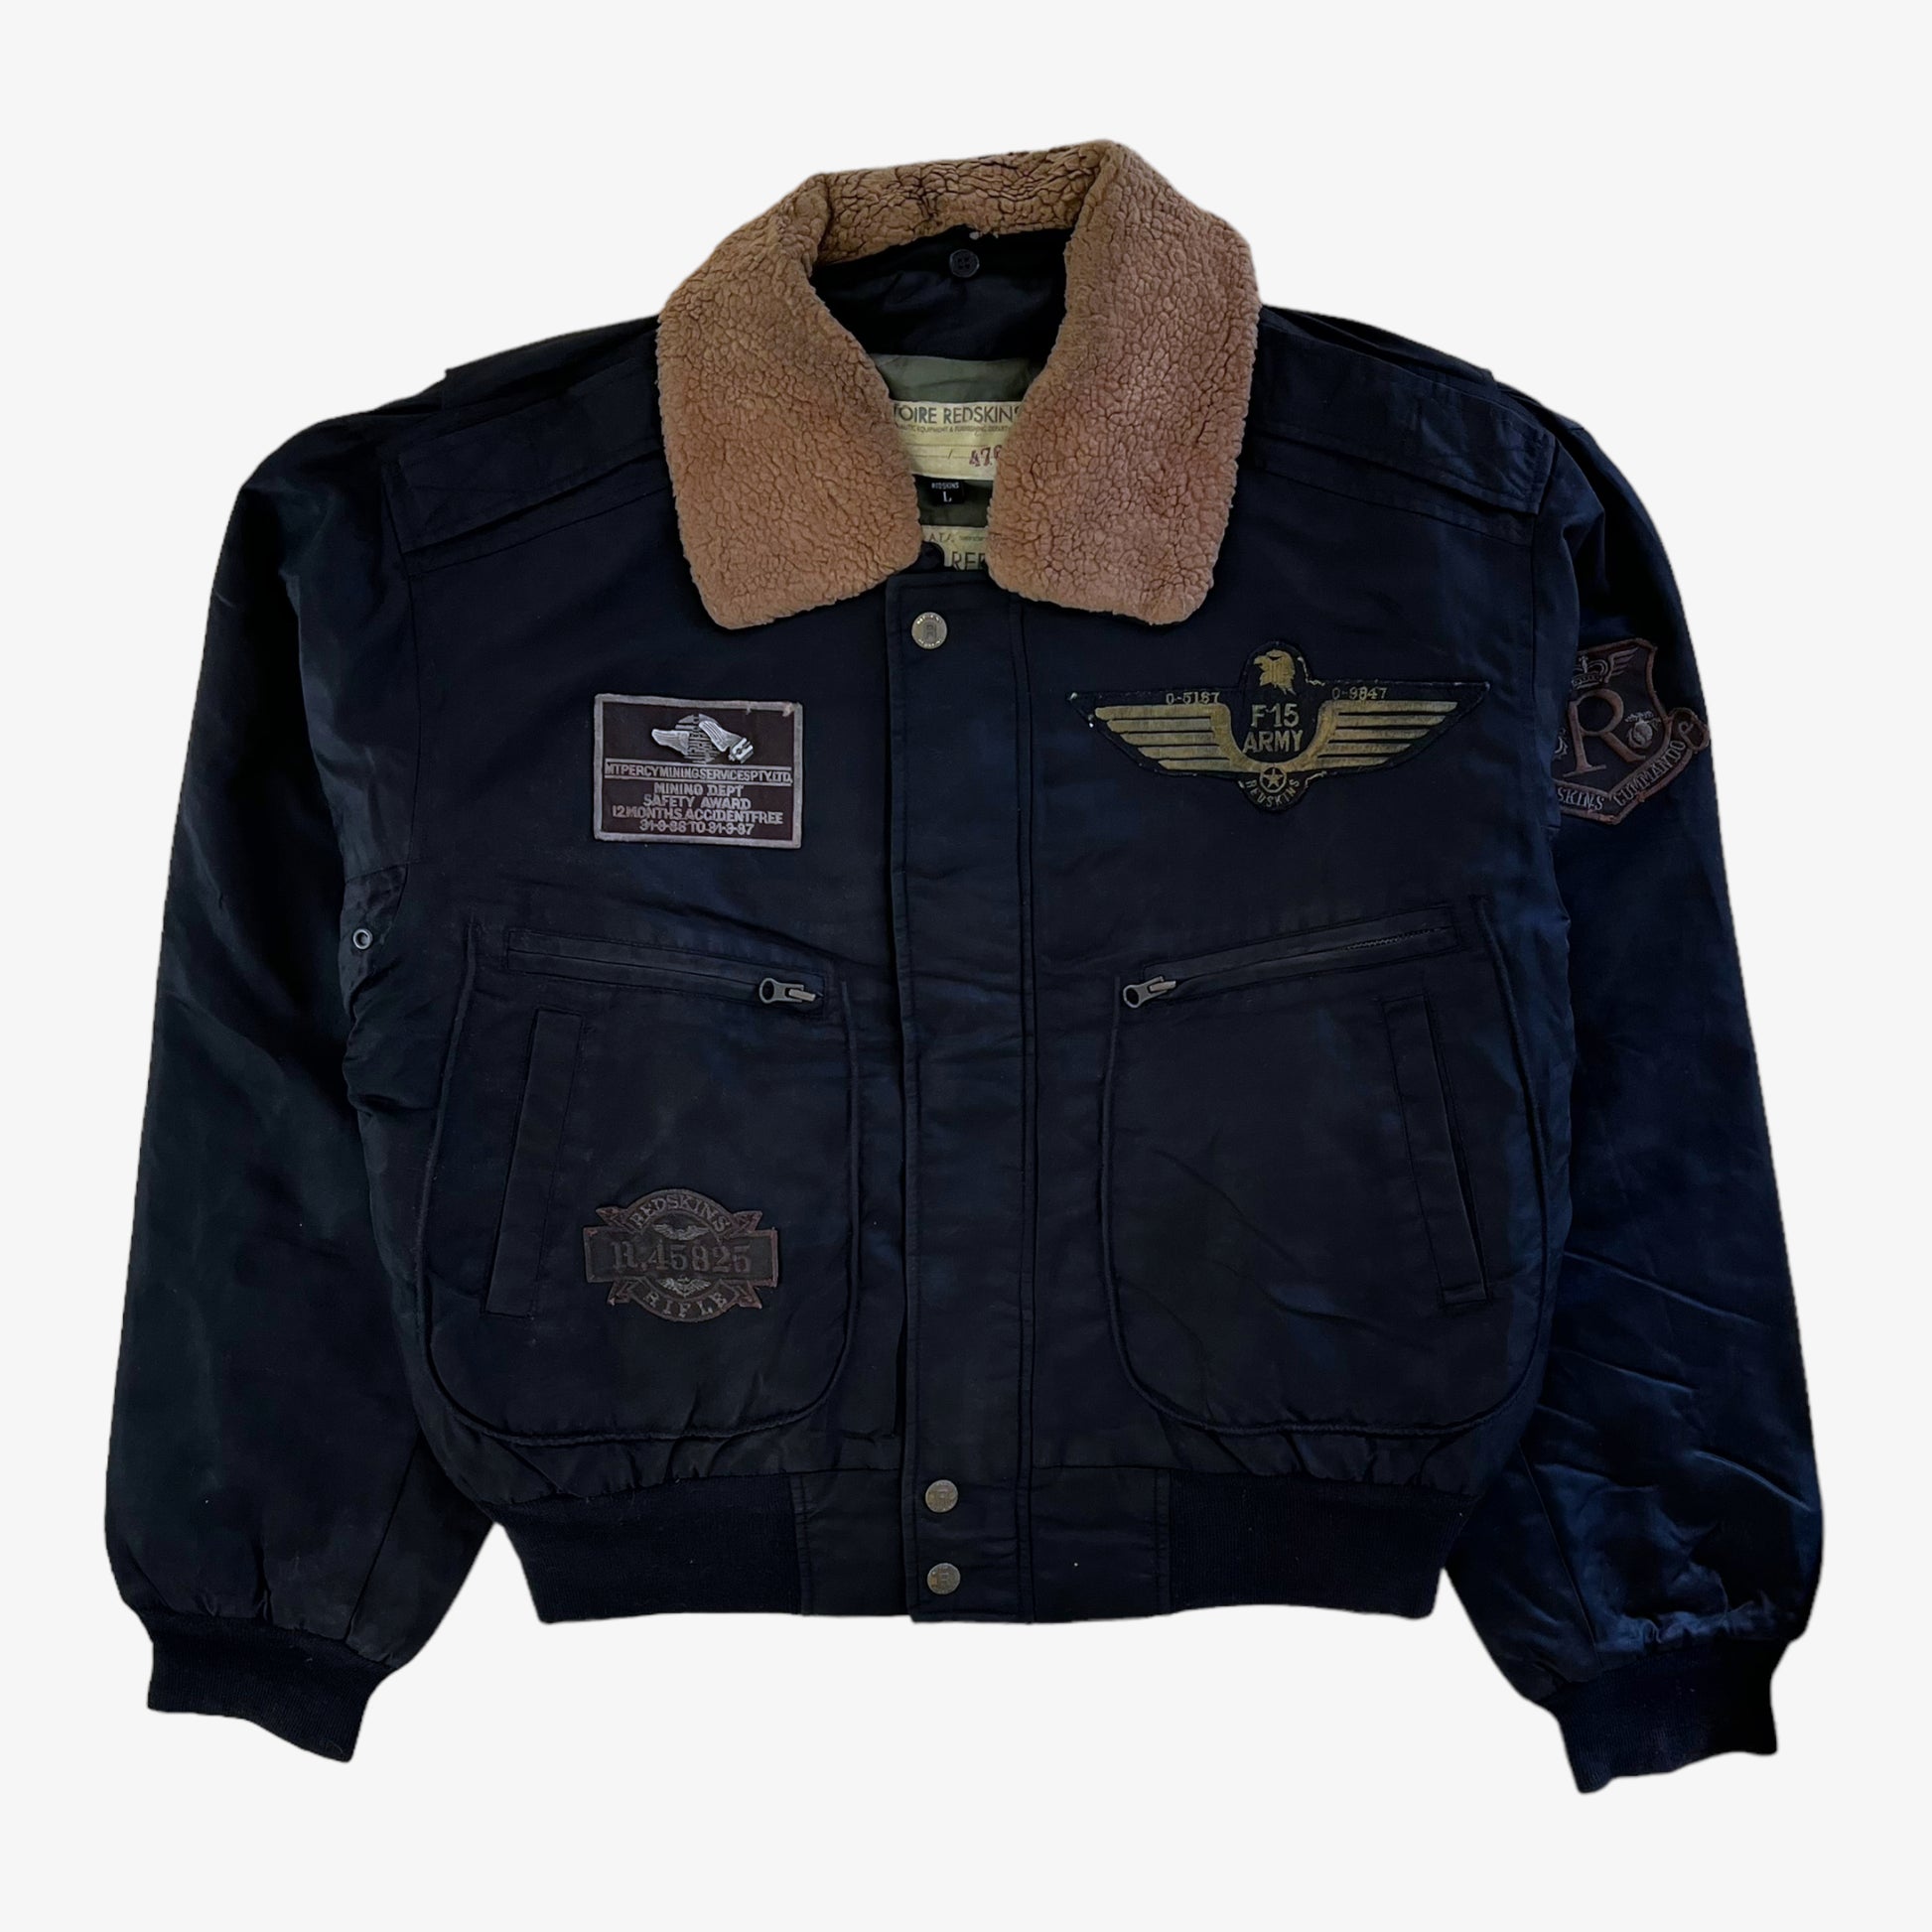 Vintage 90s Redskins Territoire Black Bomber Jacket With Fur Collar - Casspios Dream